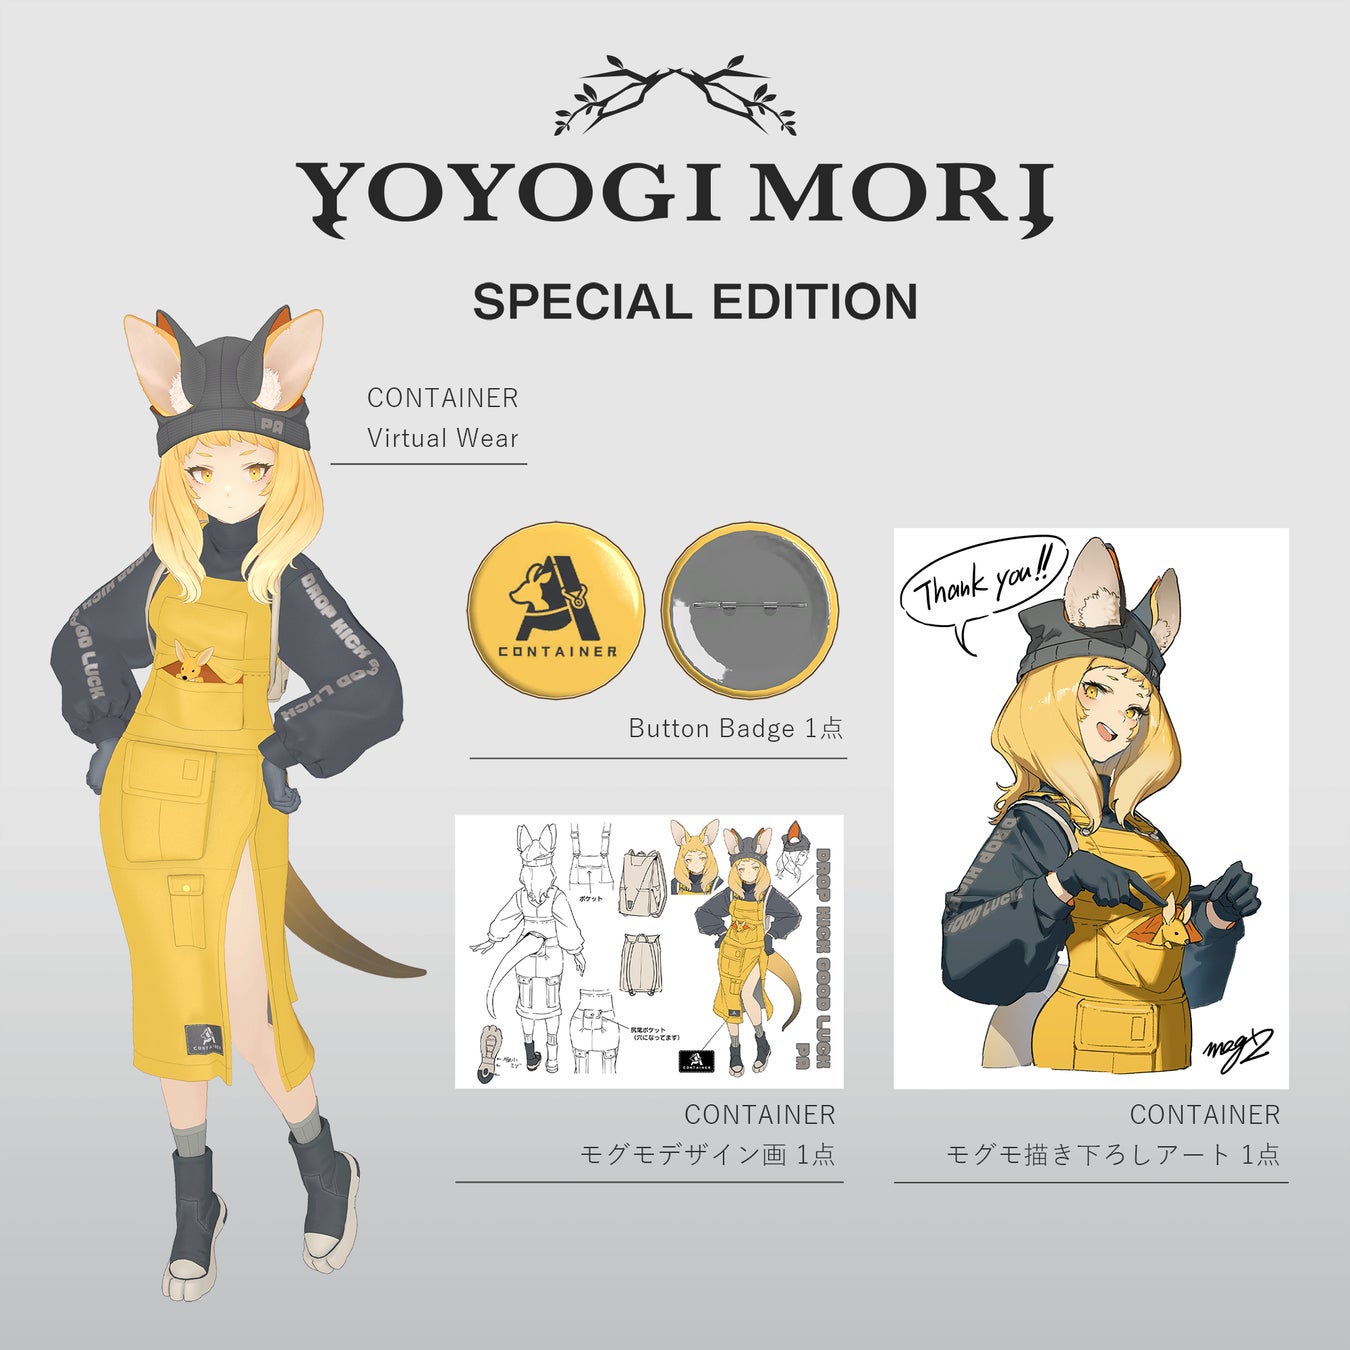 YOYOGI MORIより新作3Dモデル「CONTAINER」発表